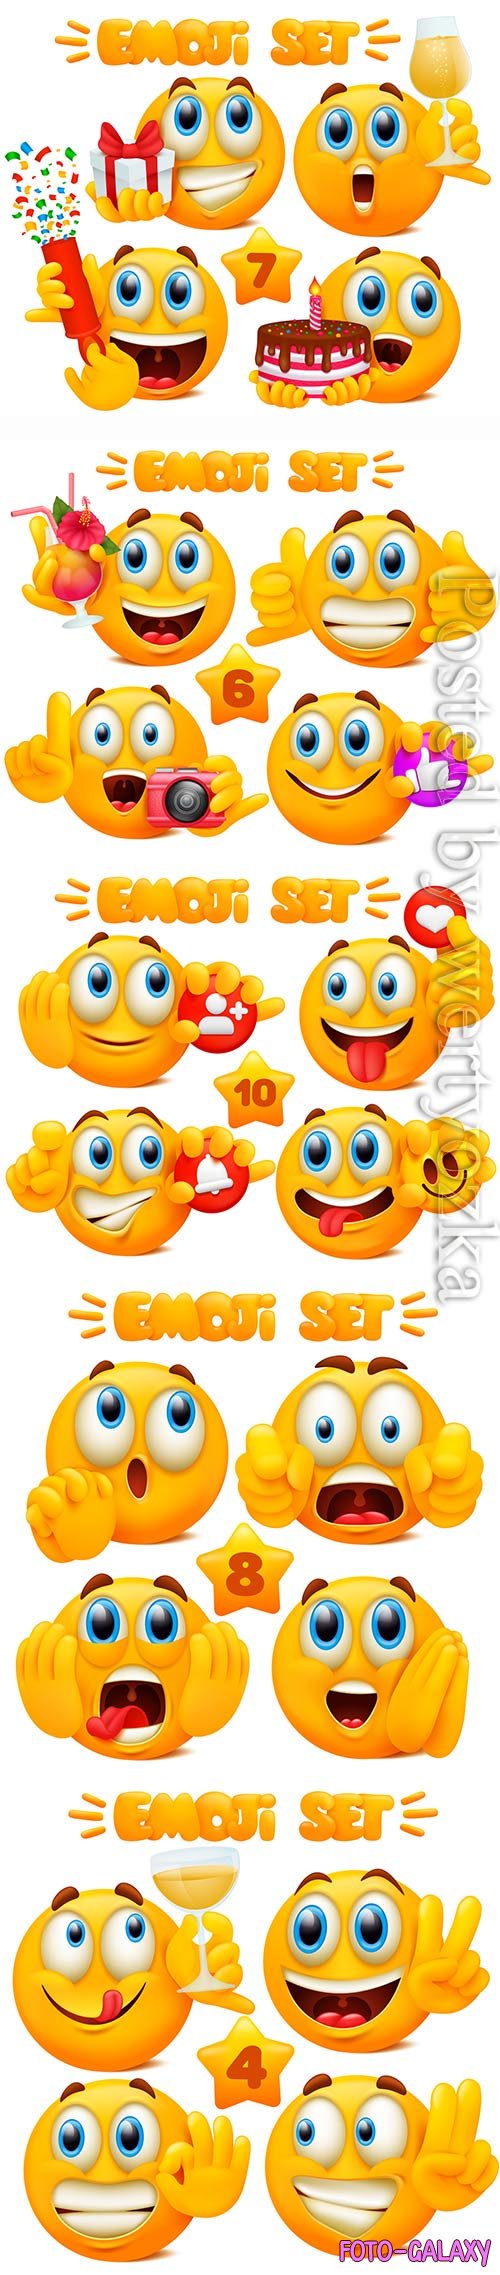 Yellow emoji cartoon characters in glossy 3d